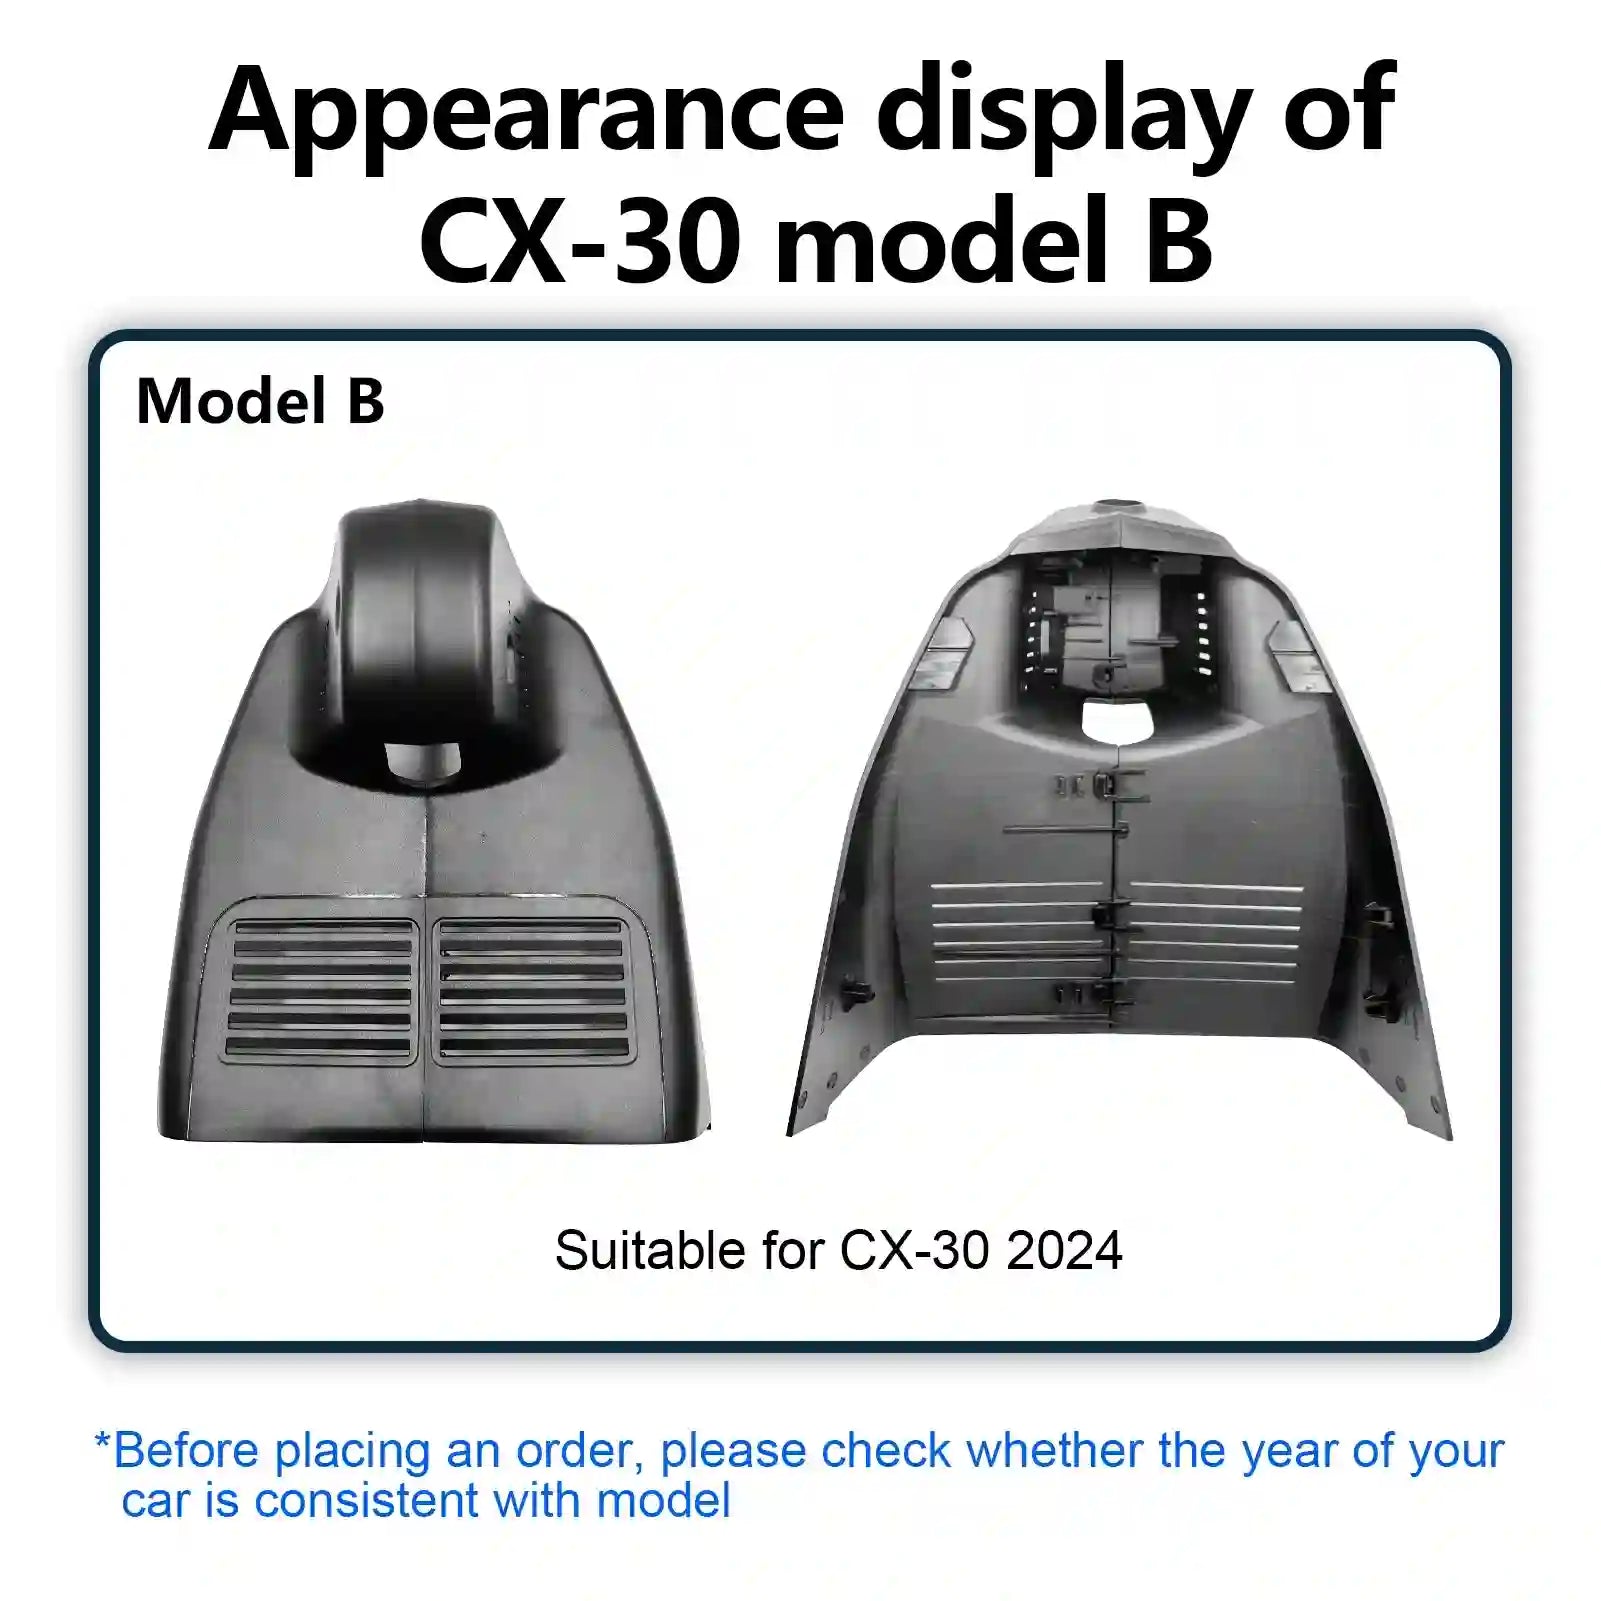 4K Dash Cam Custom fit for Mazda CX-30 2024 (Model B), UHD 2160P Video, Free App & Wifi, 64GB Card